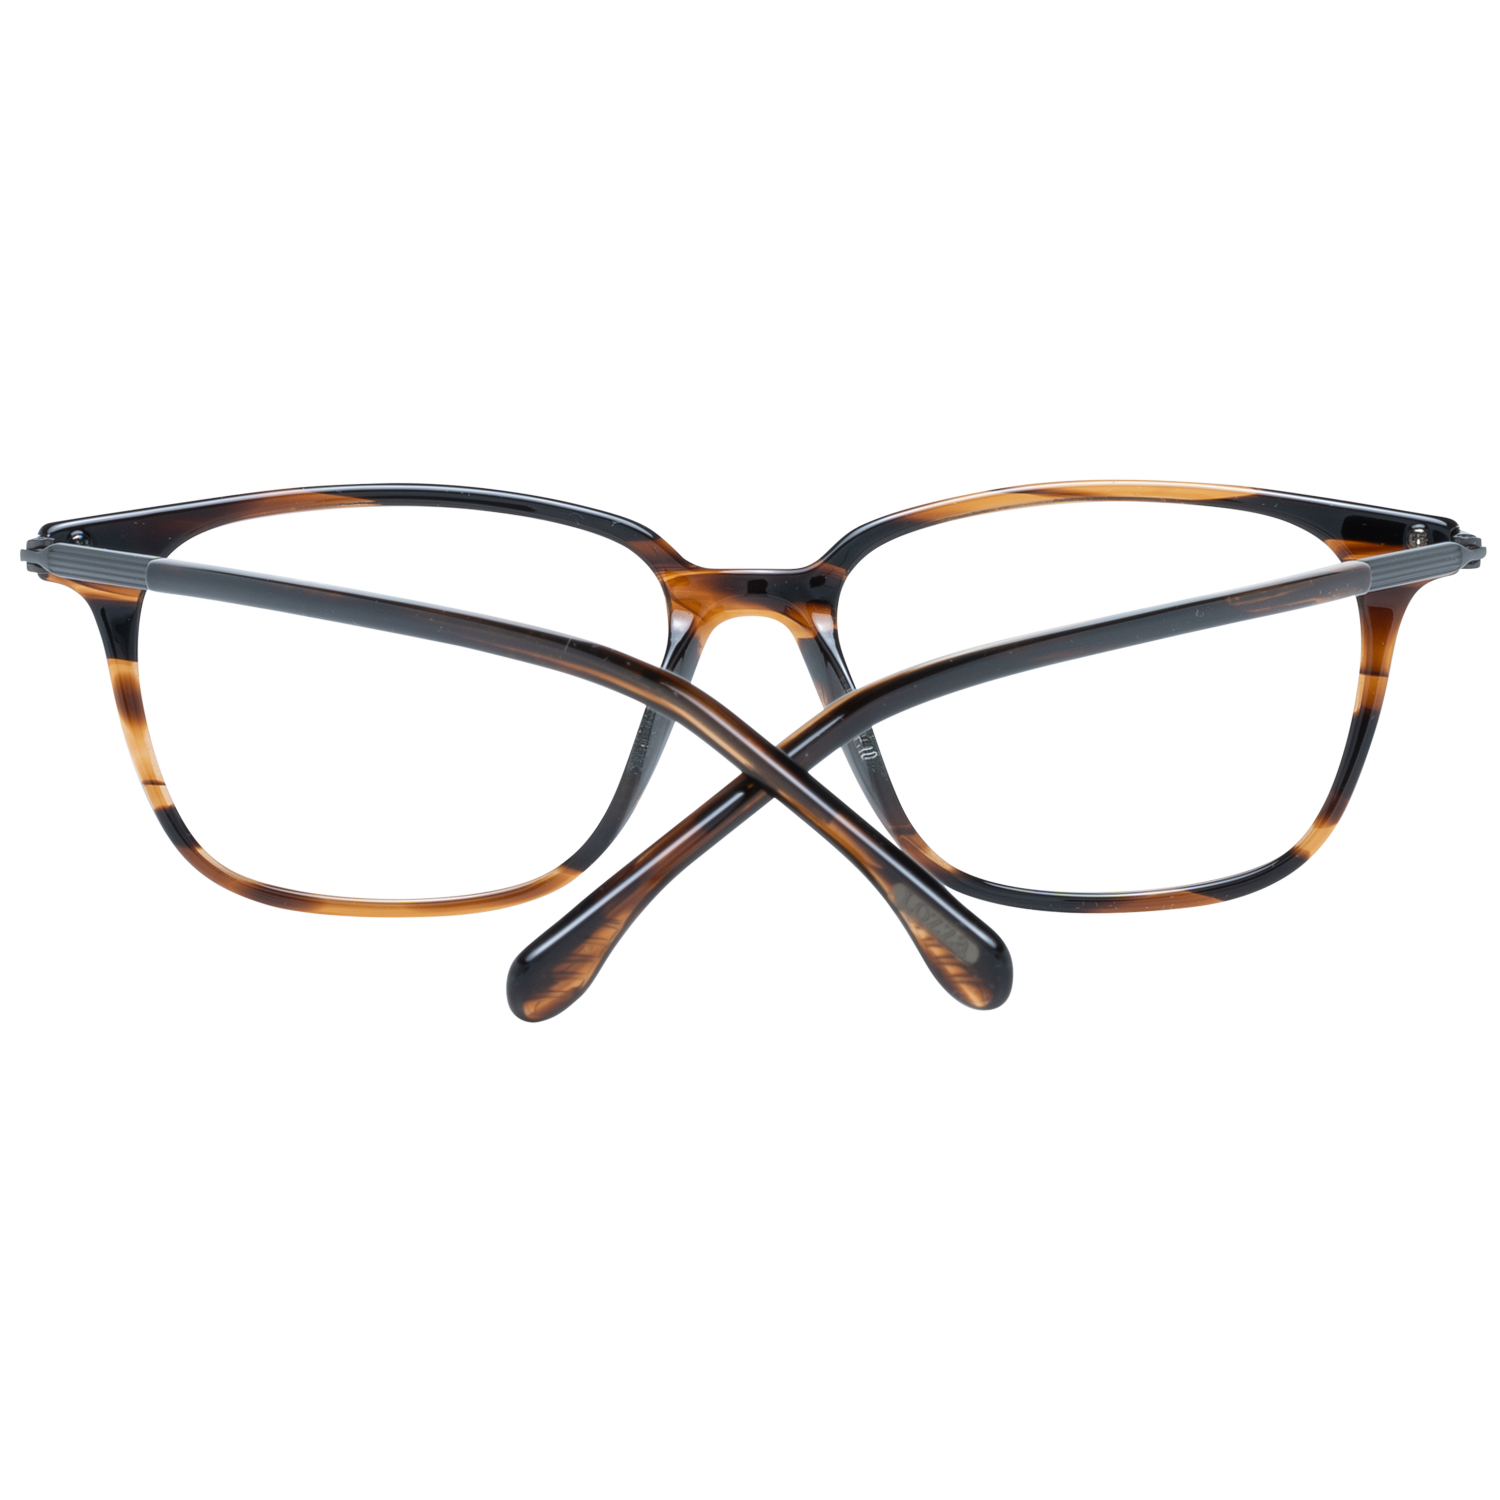 Lozza Frames Lozza Optical Frame VL4089 06YH 53 Eyeglasses Eyewear UK USA Australia 